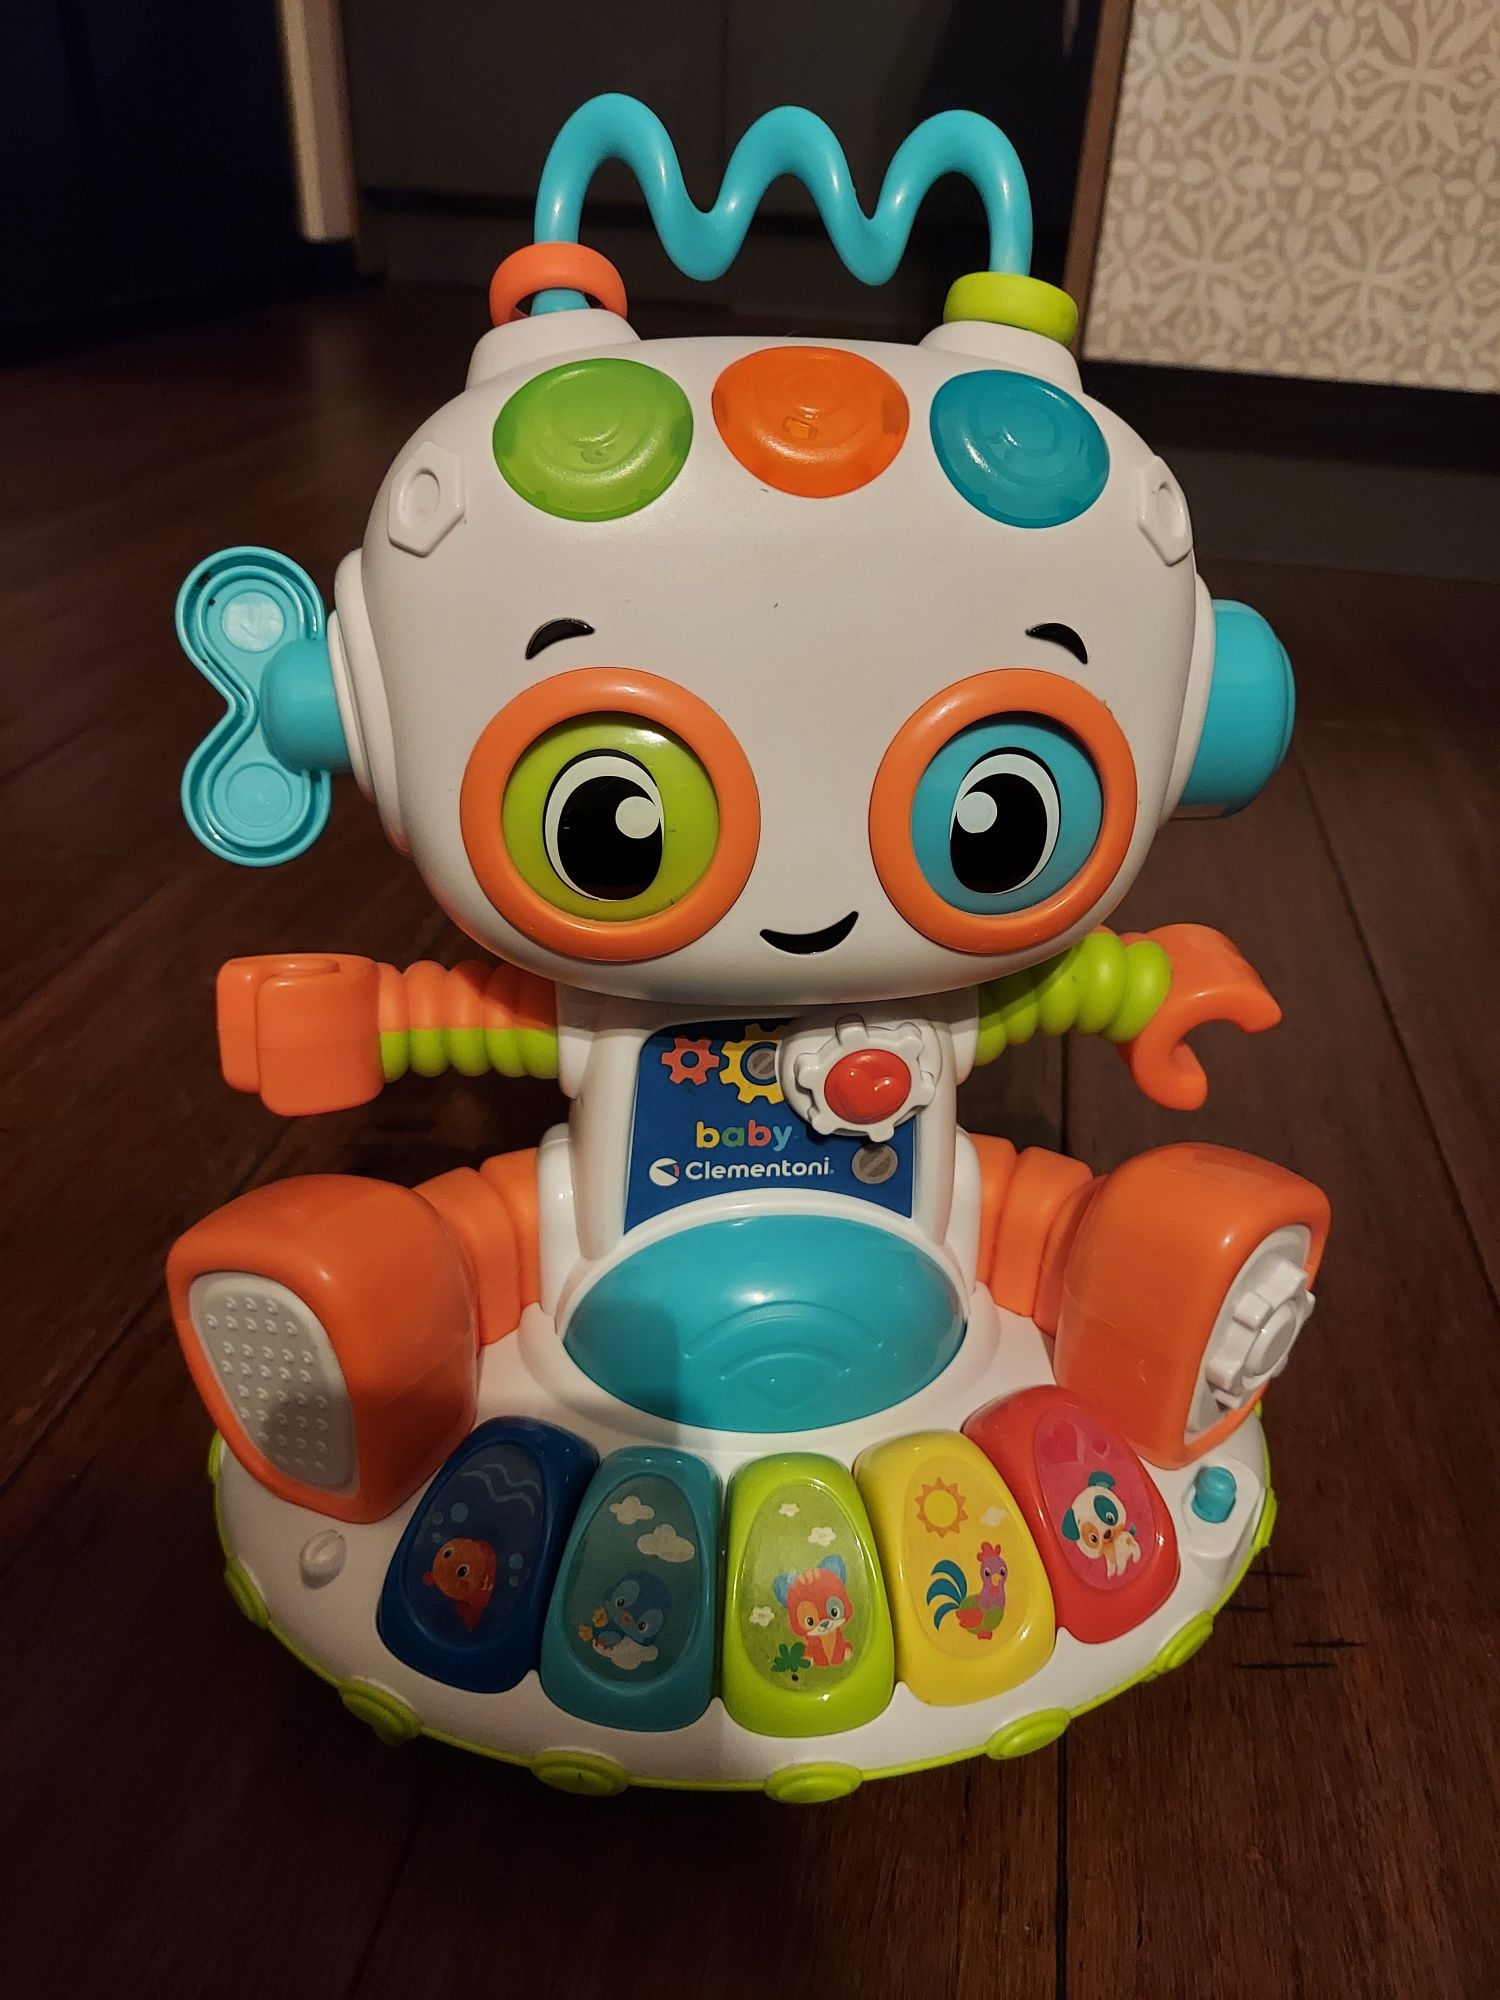 Robot baby Clementoni dzień dziecka